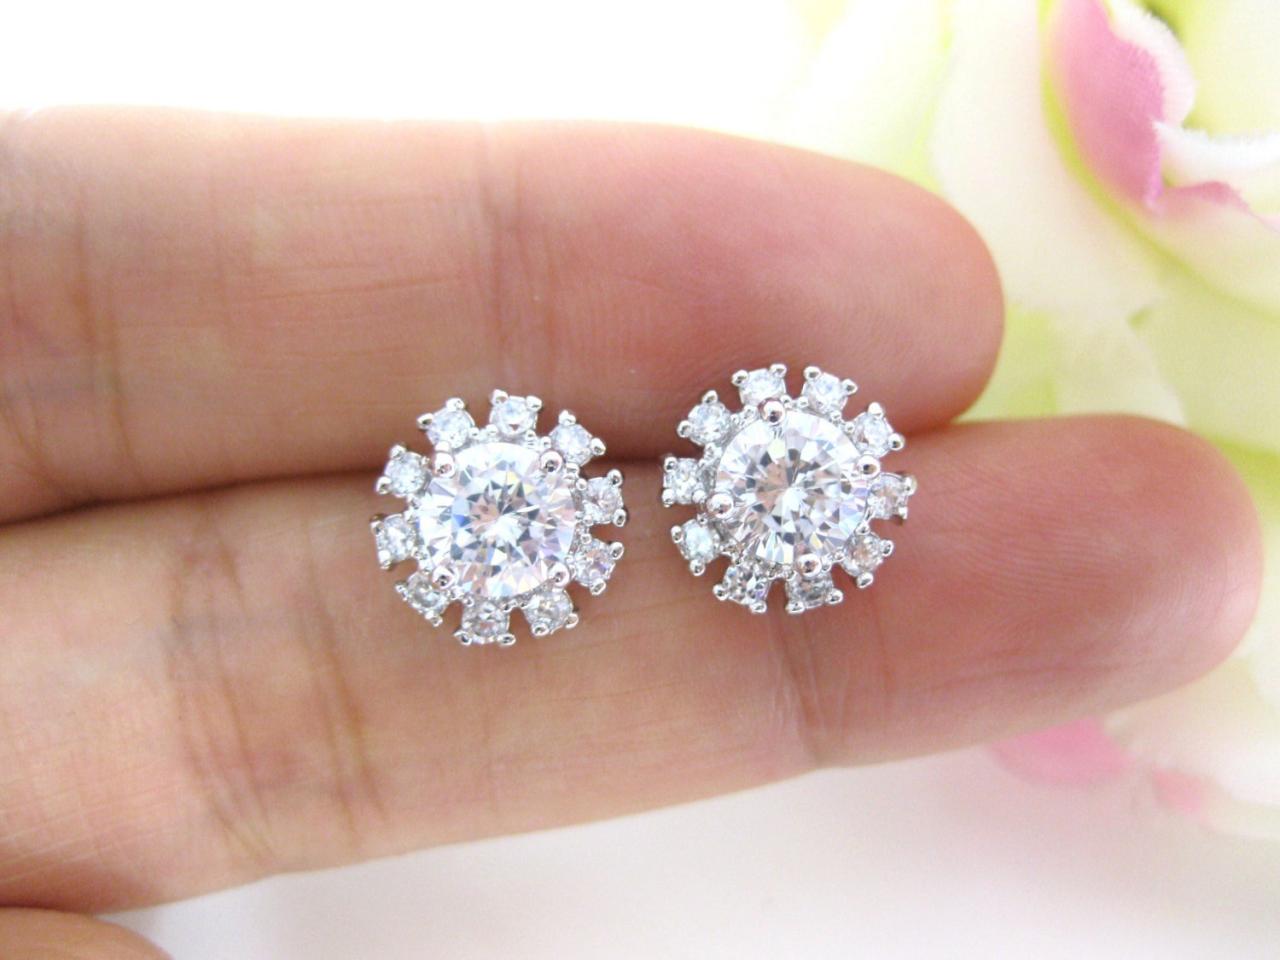 Crystal Stud Earrings Bridal Sunburst Cubic Zirconia Earrings Wedding Jewelry Bridesmaids Gift Birthday Gift Simple Dainty Jewelry (e109)